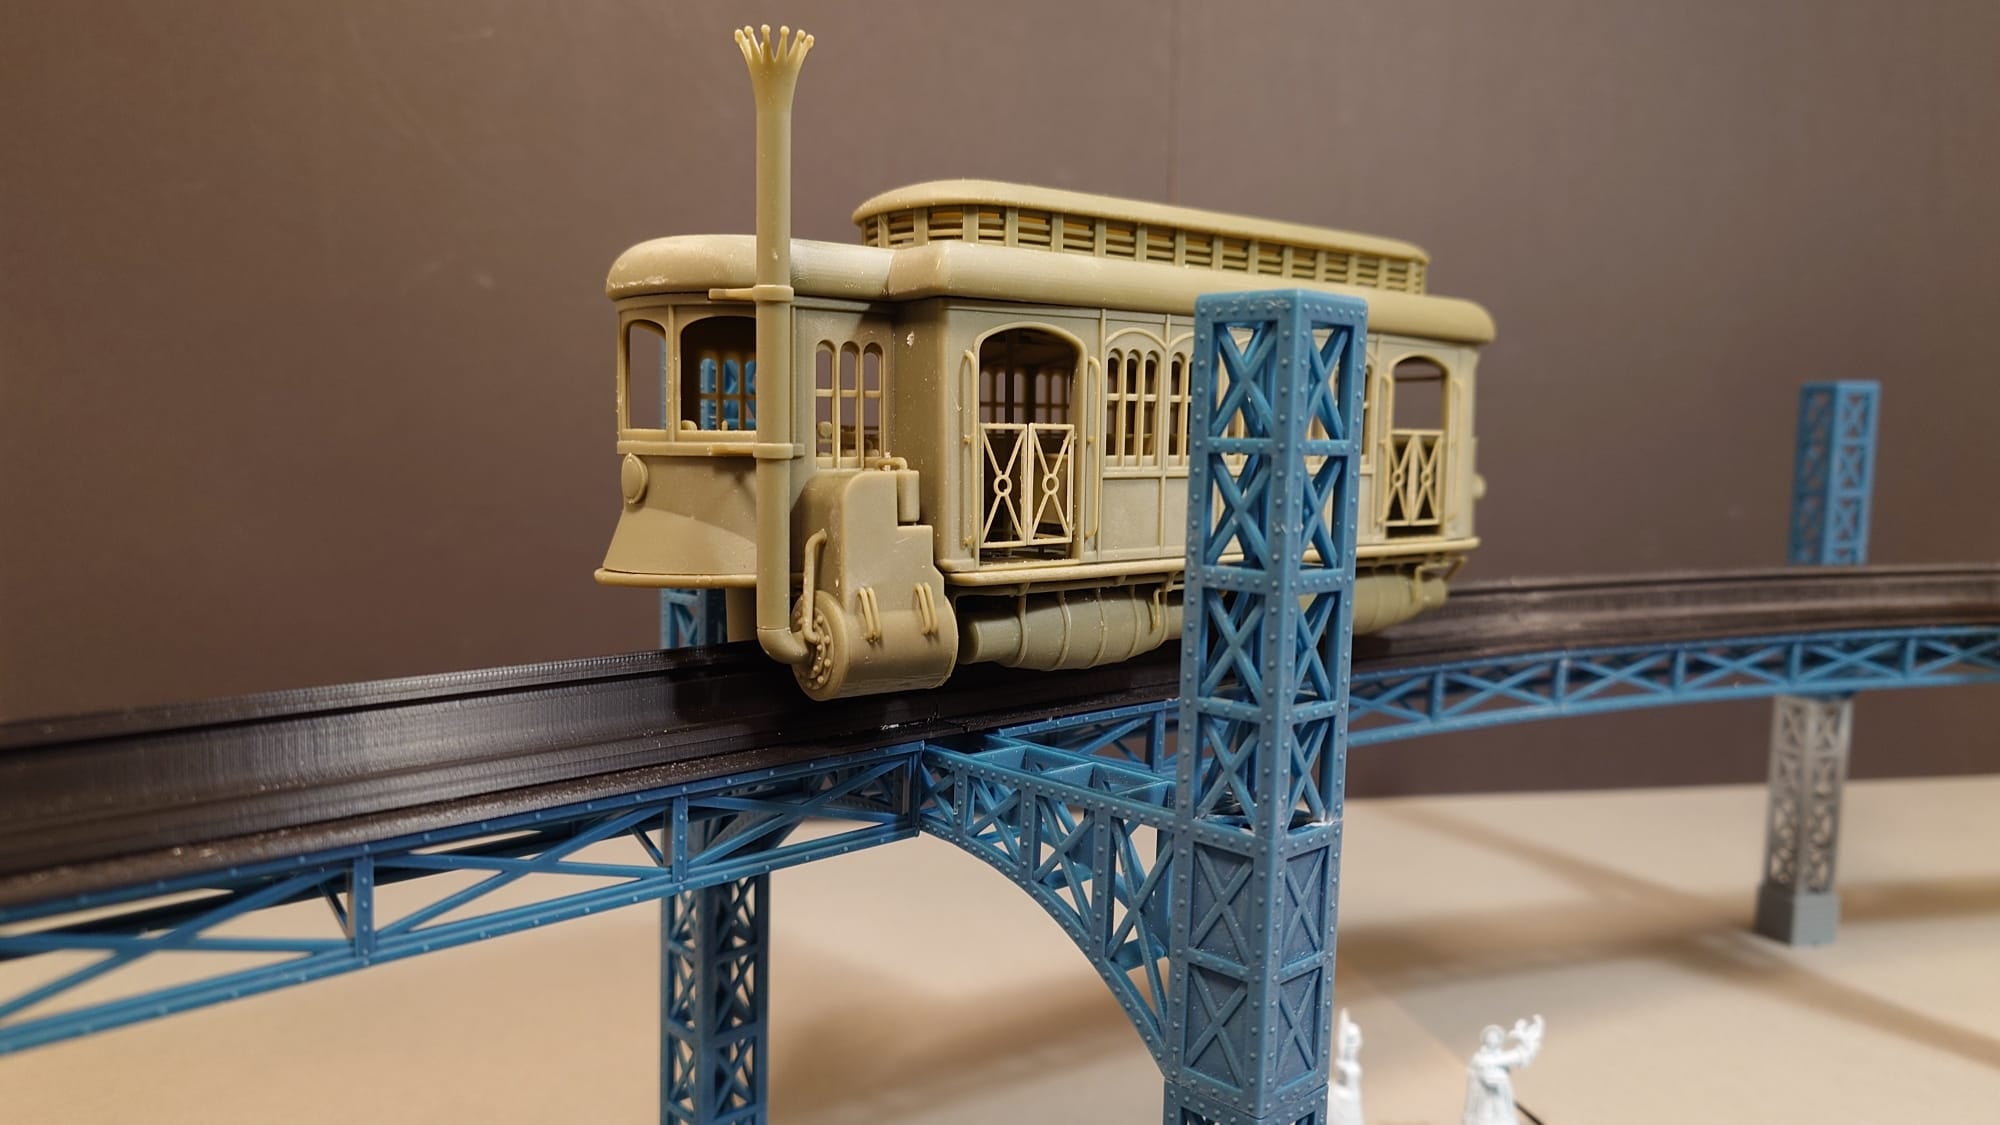 A 3d model of tram and rails